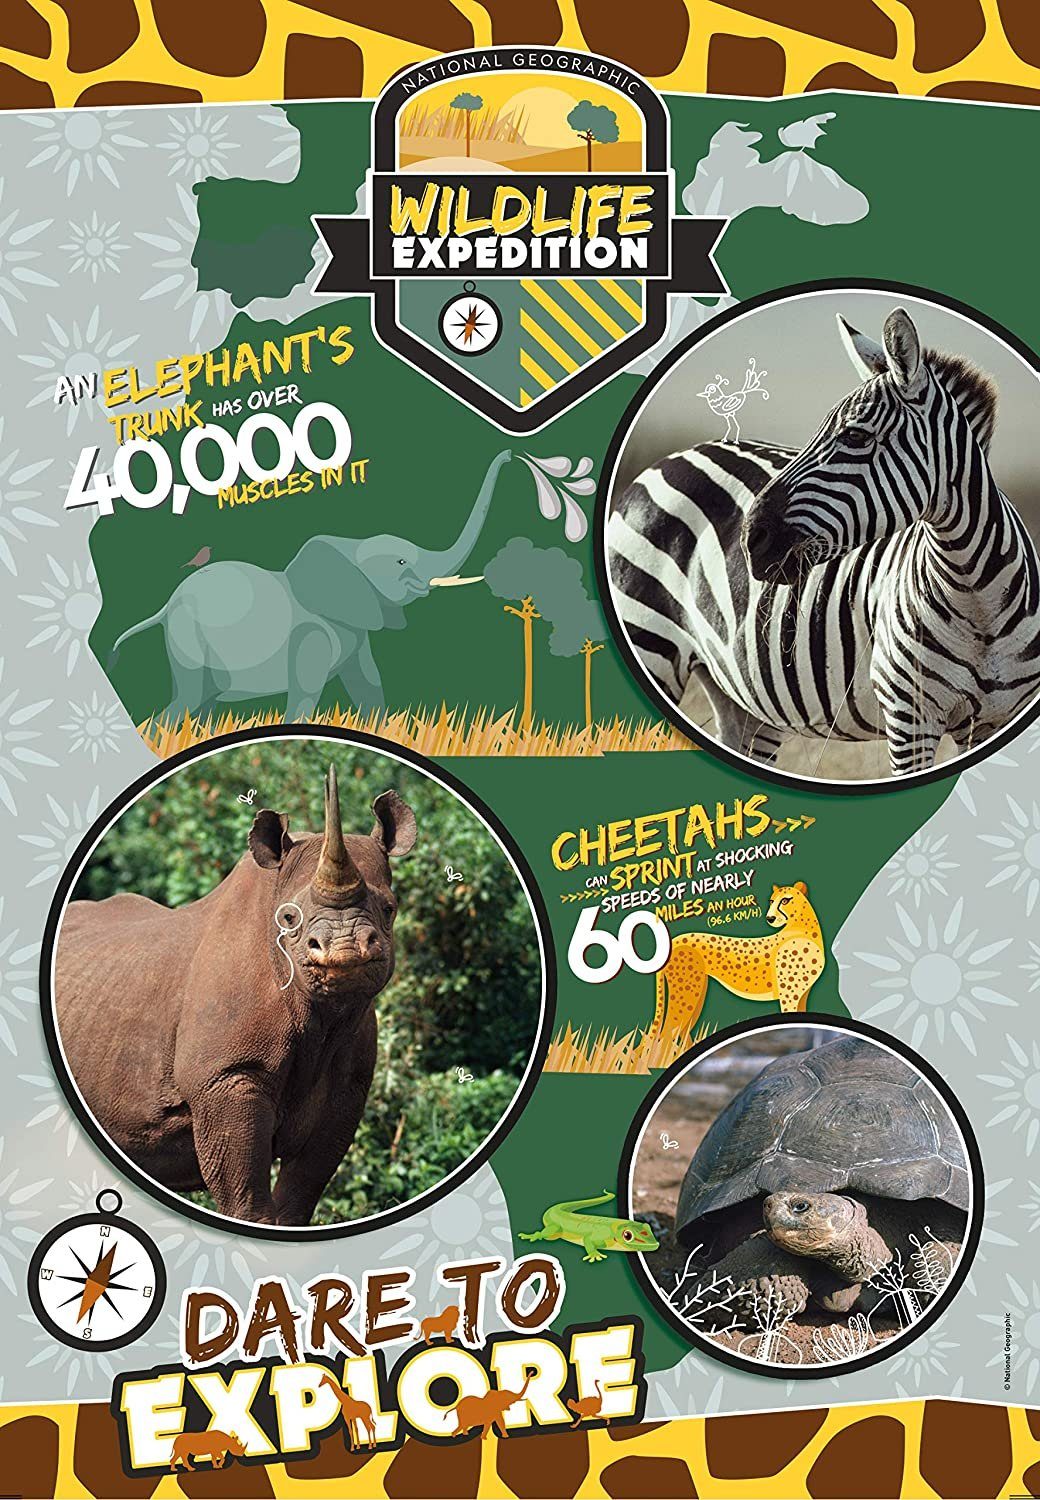 Puzzle Geographic 180 Teile), Kids Clementoni® Puzzleteile Wildlife Expedition (180 National Puzzle